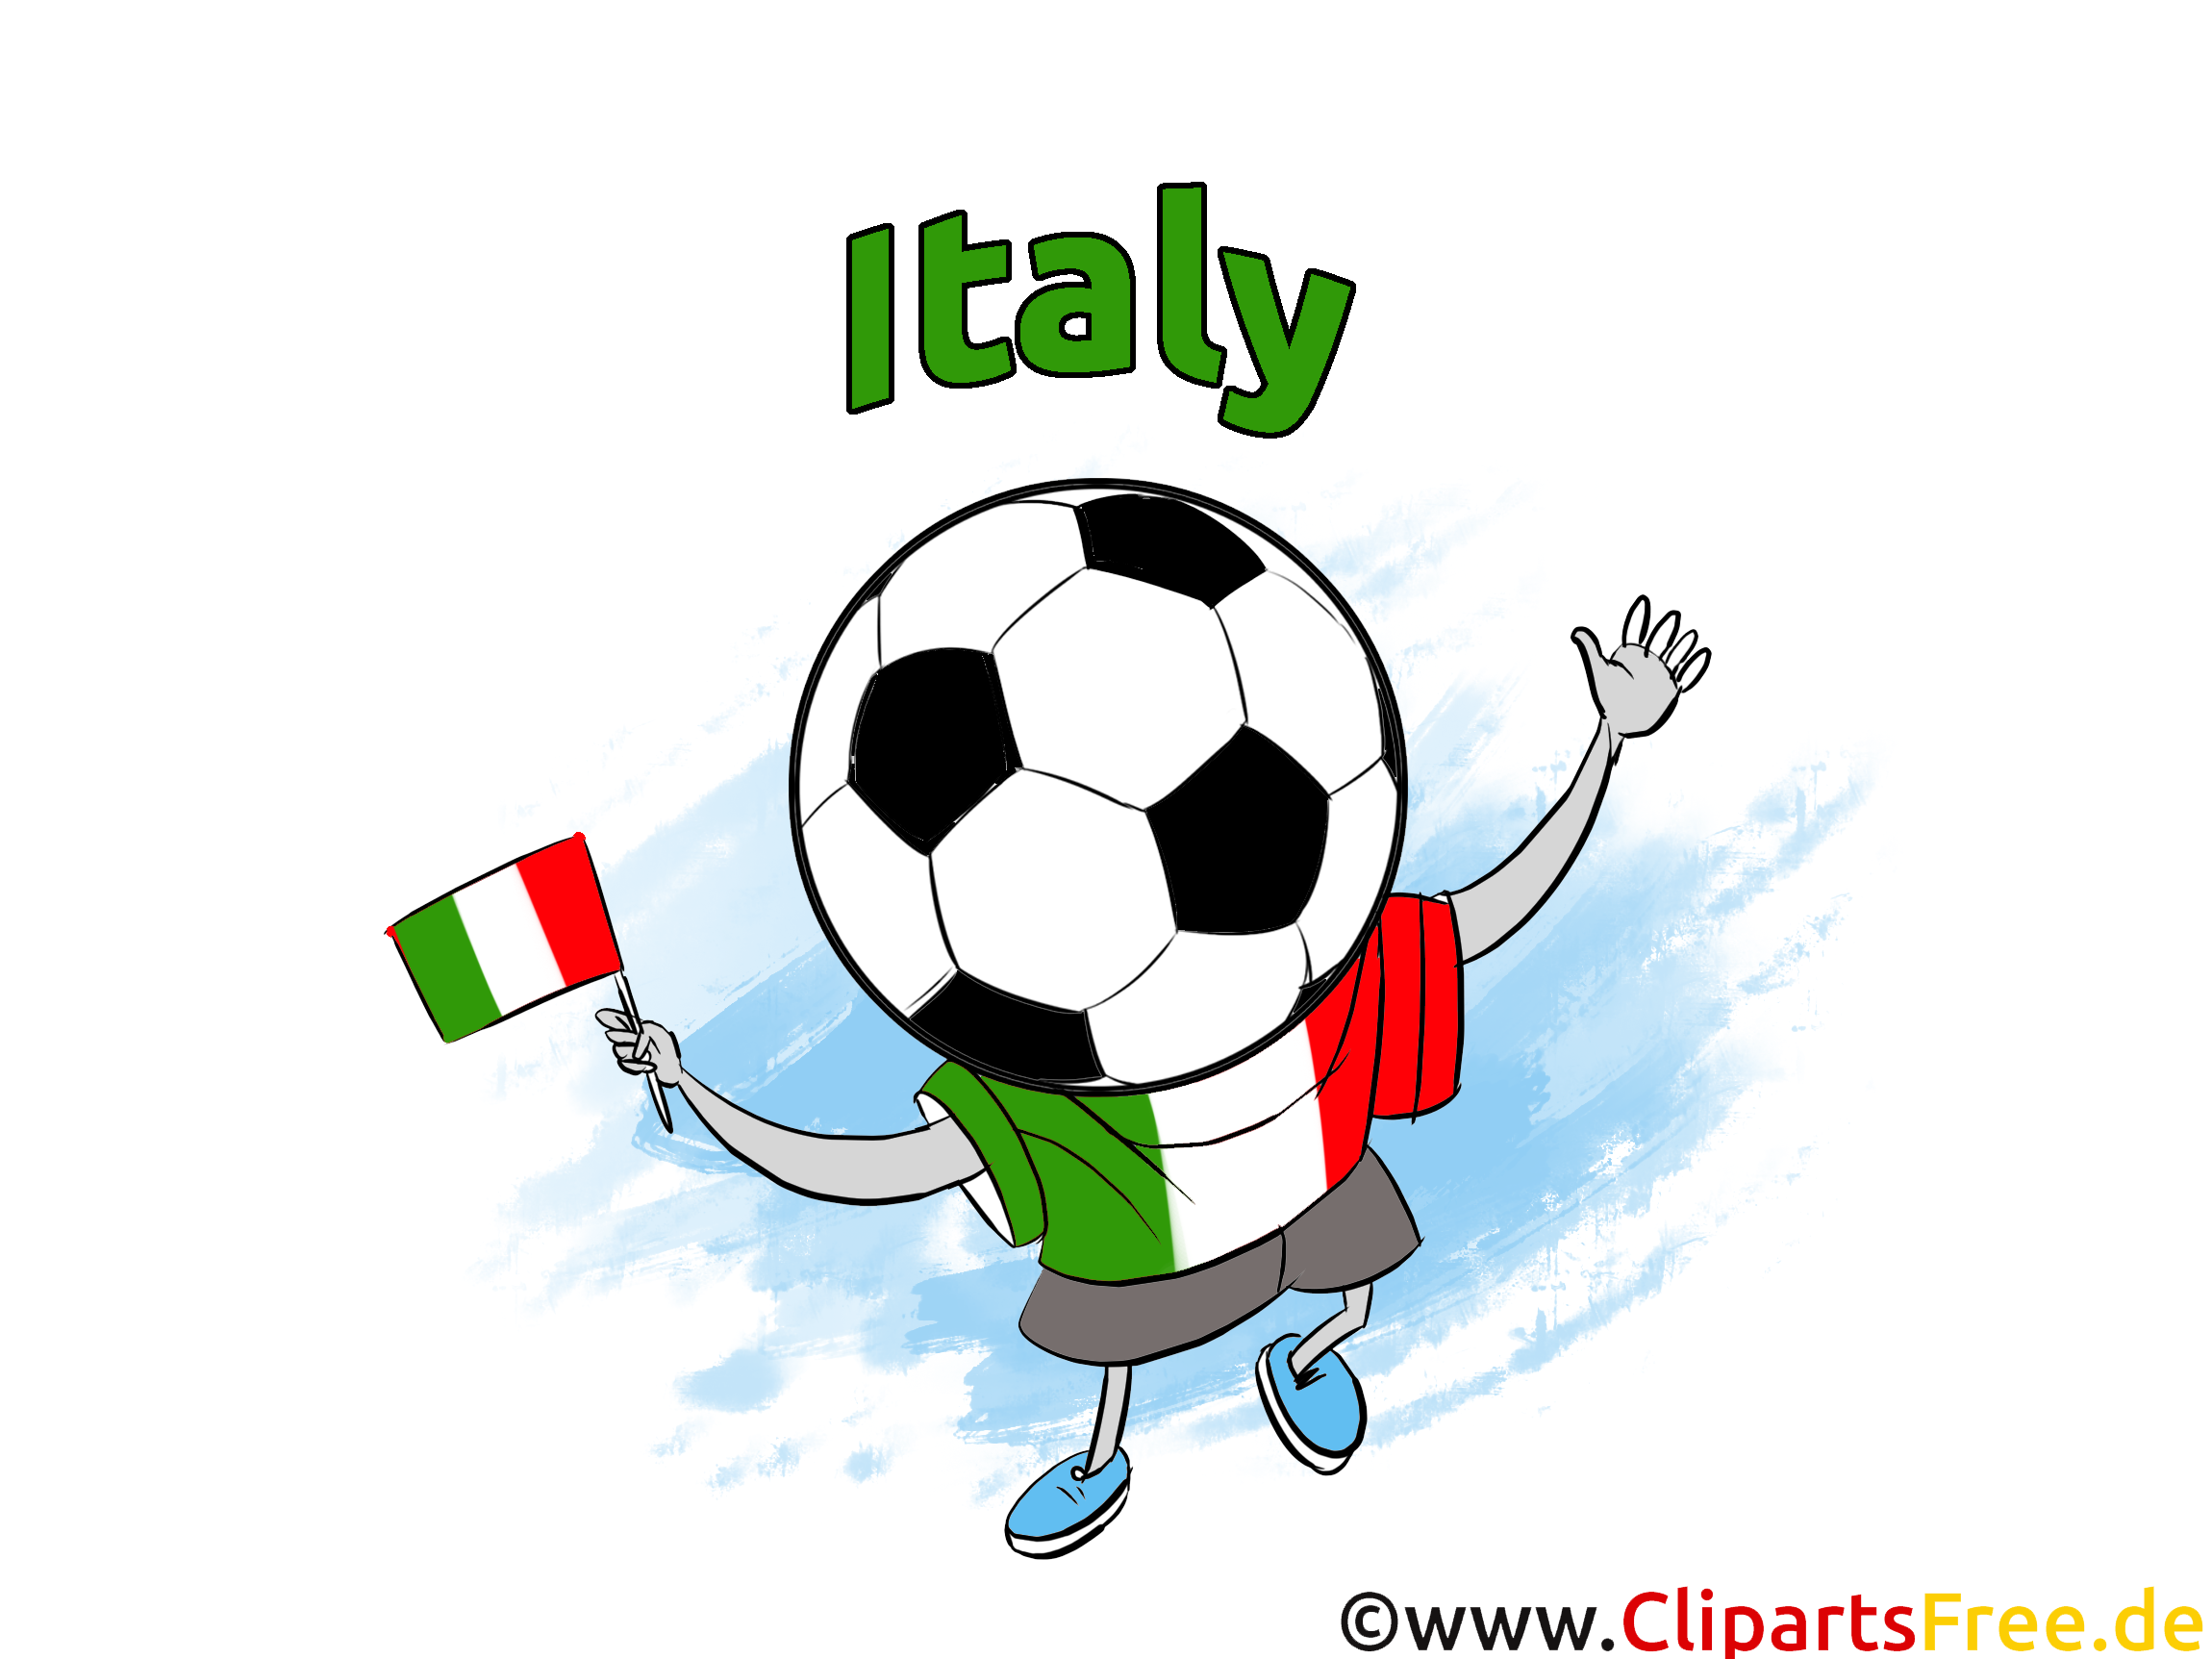 Joueur Football Soccer Italie gratuit Image